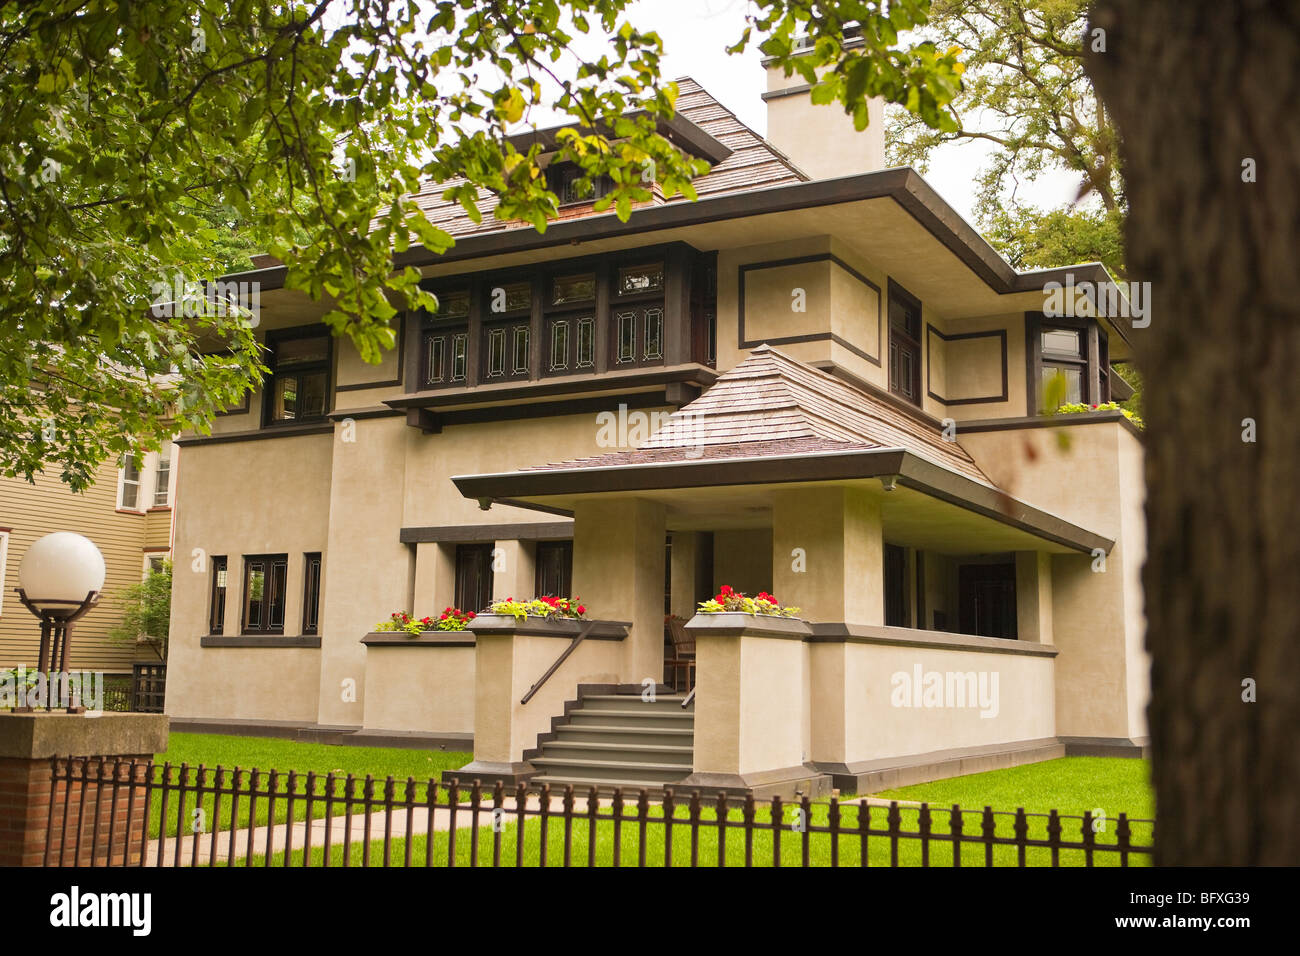 Hills-DeCaro House by architect Frank Lloyd Wright, Frank Lloyd Wright Historic District, Oak Park, Illinois, United States Stock Photo